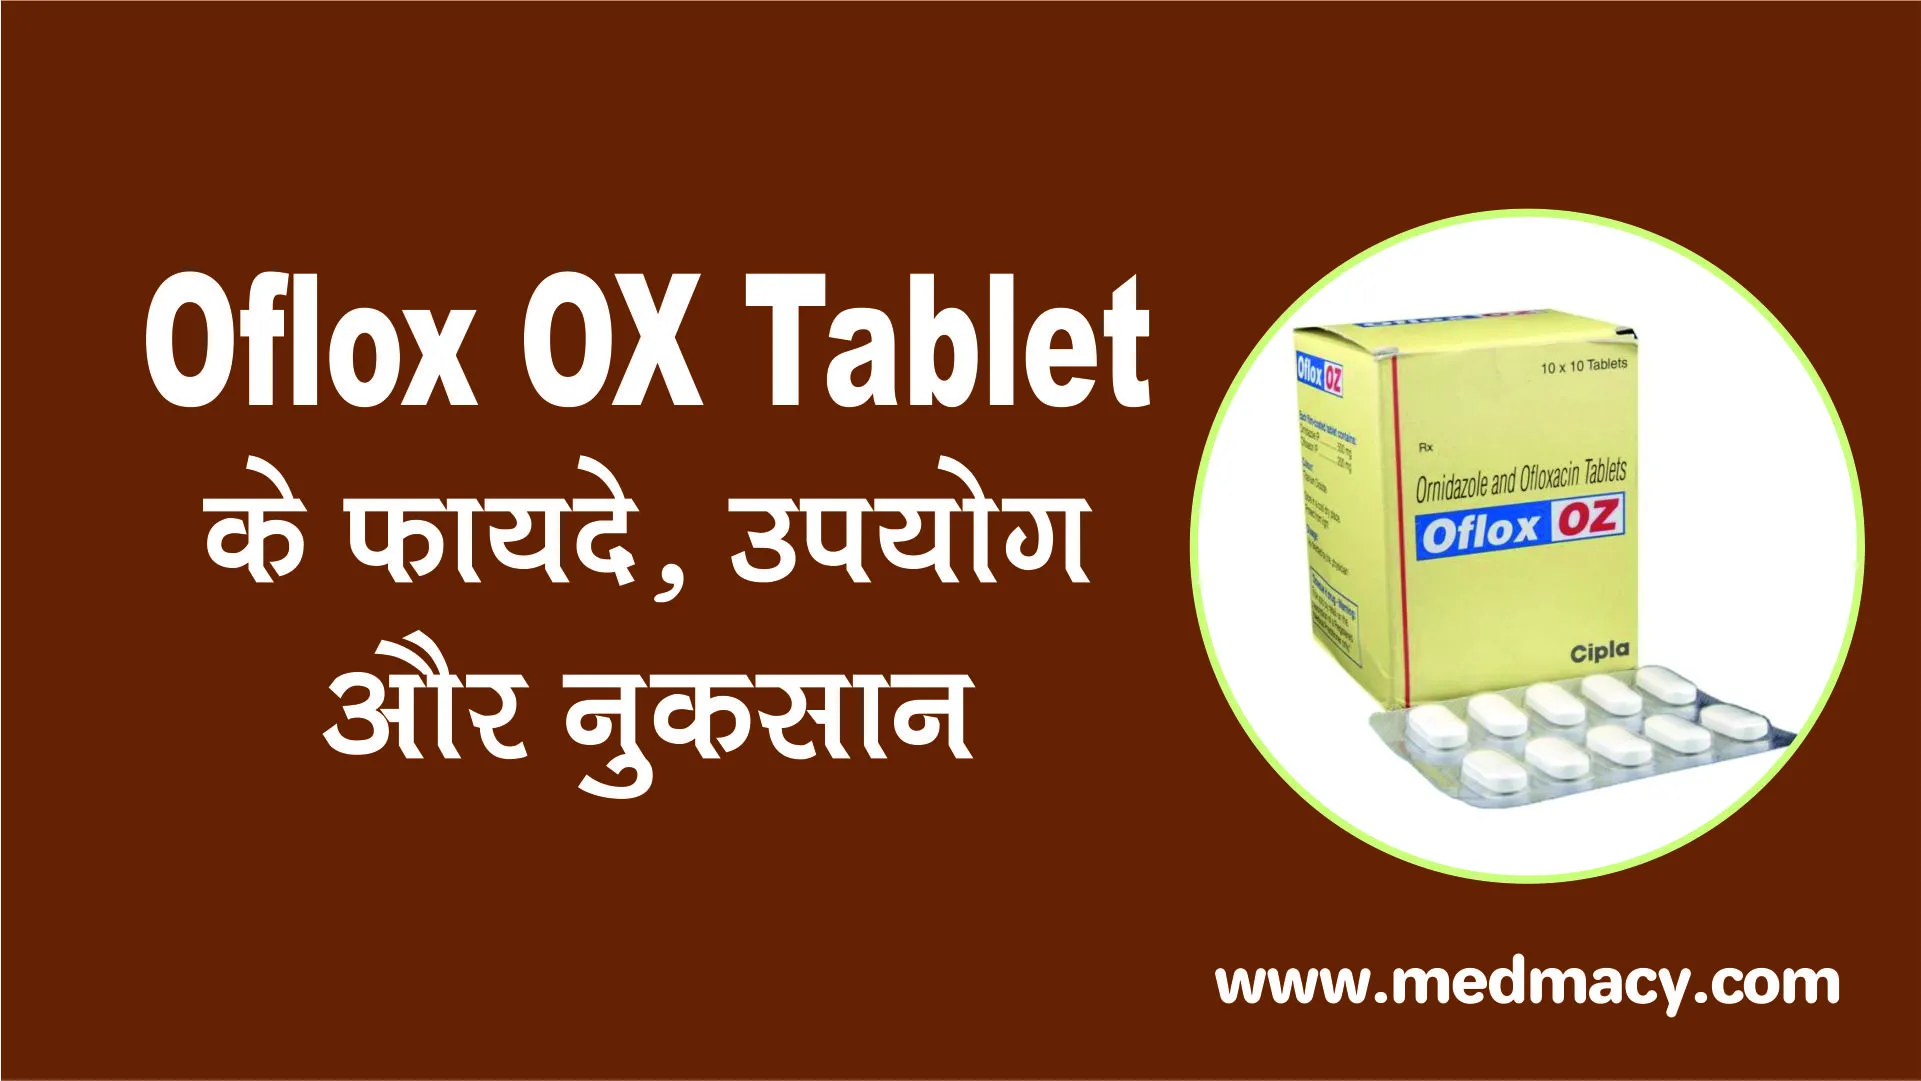 oflox oz tablet uses in hindi